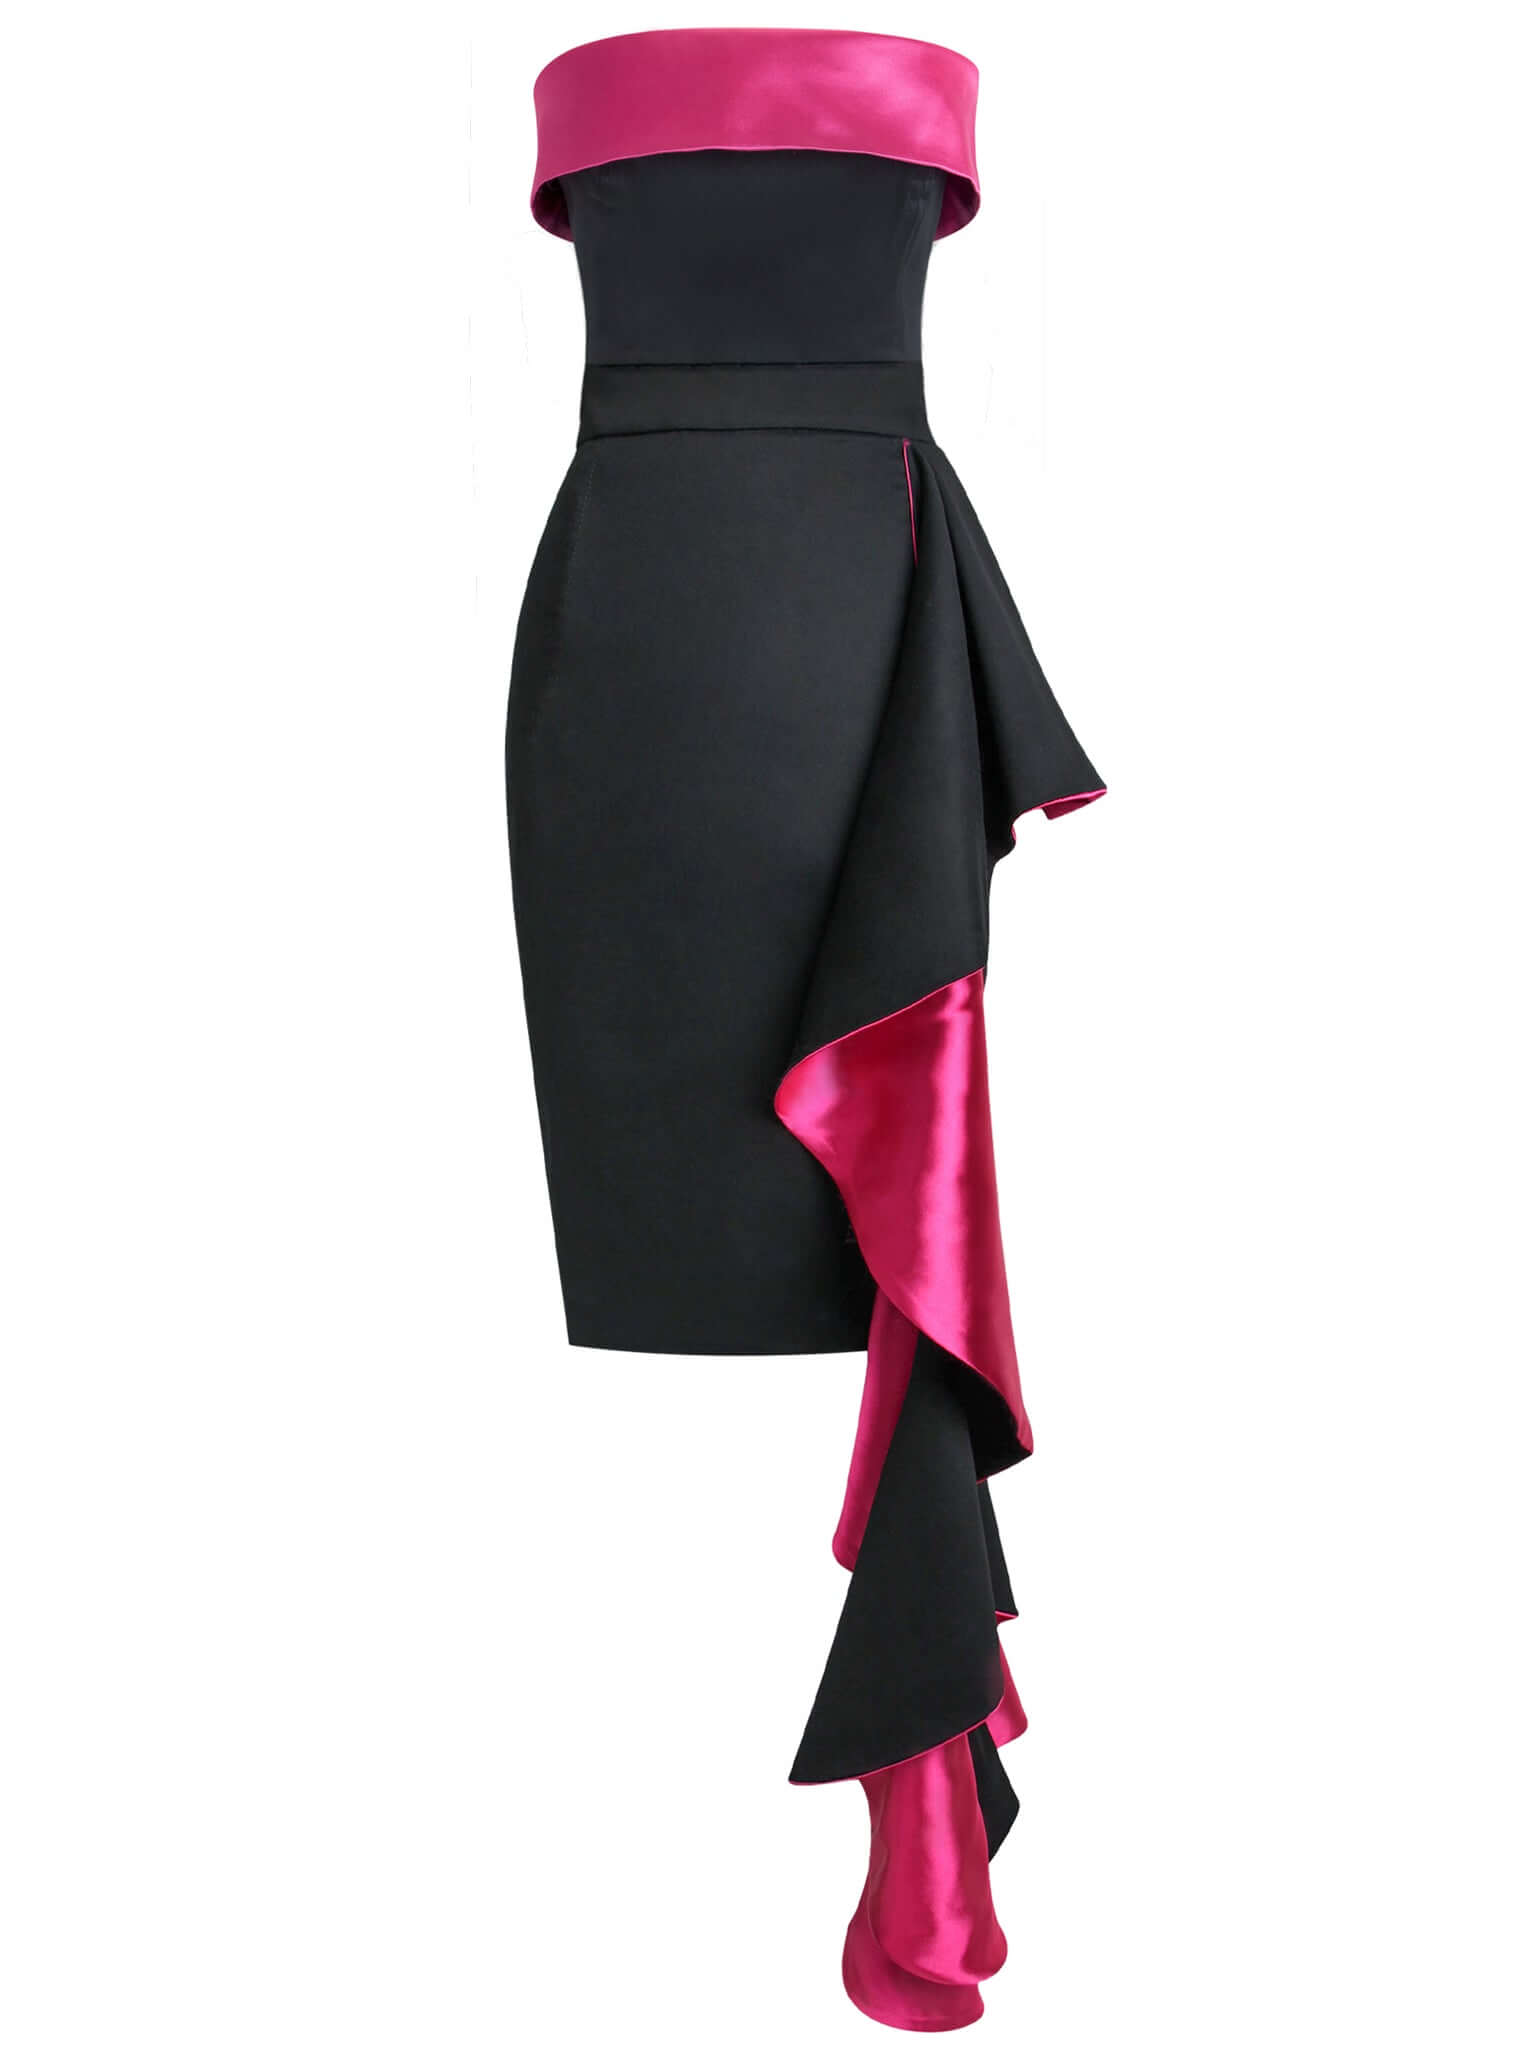 More is More Bodycon Midi Dress - Black by Tia Dorraine Women's Luxury Fashion Designer Clothing Brand